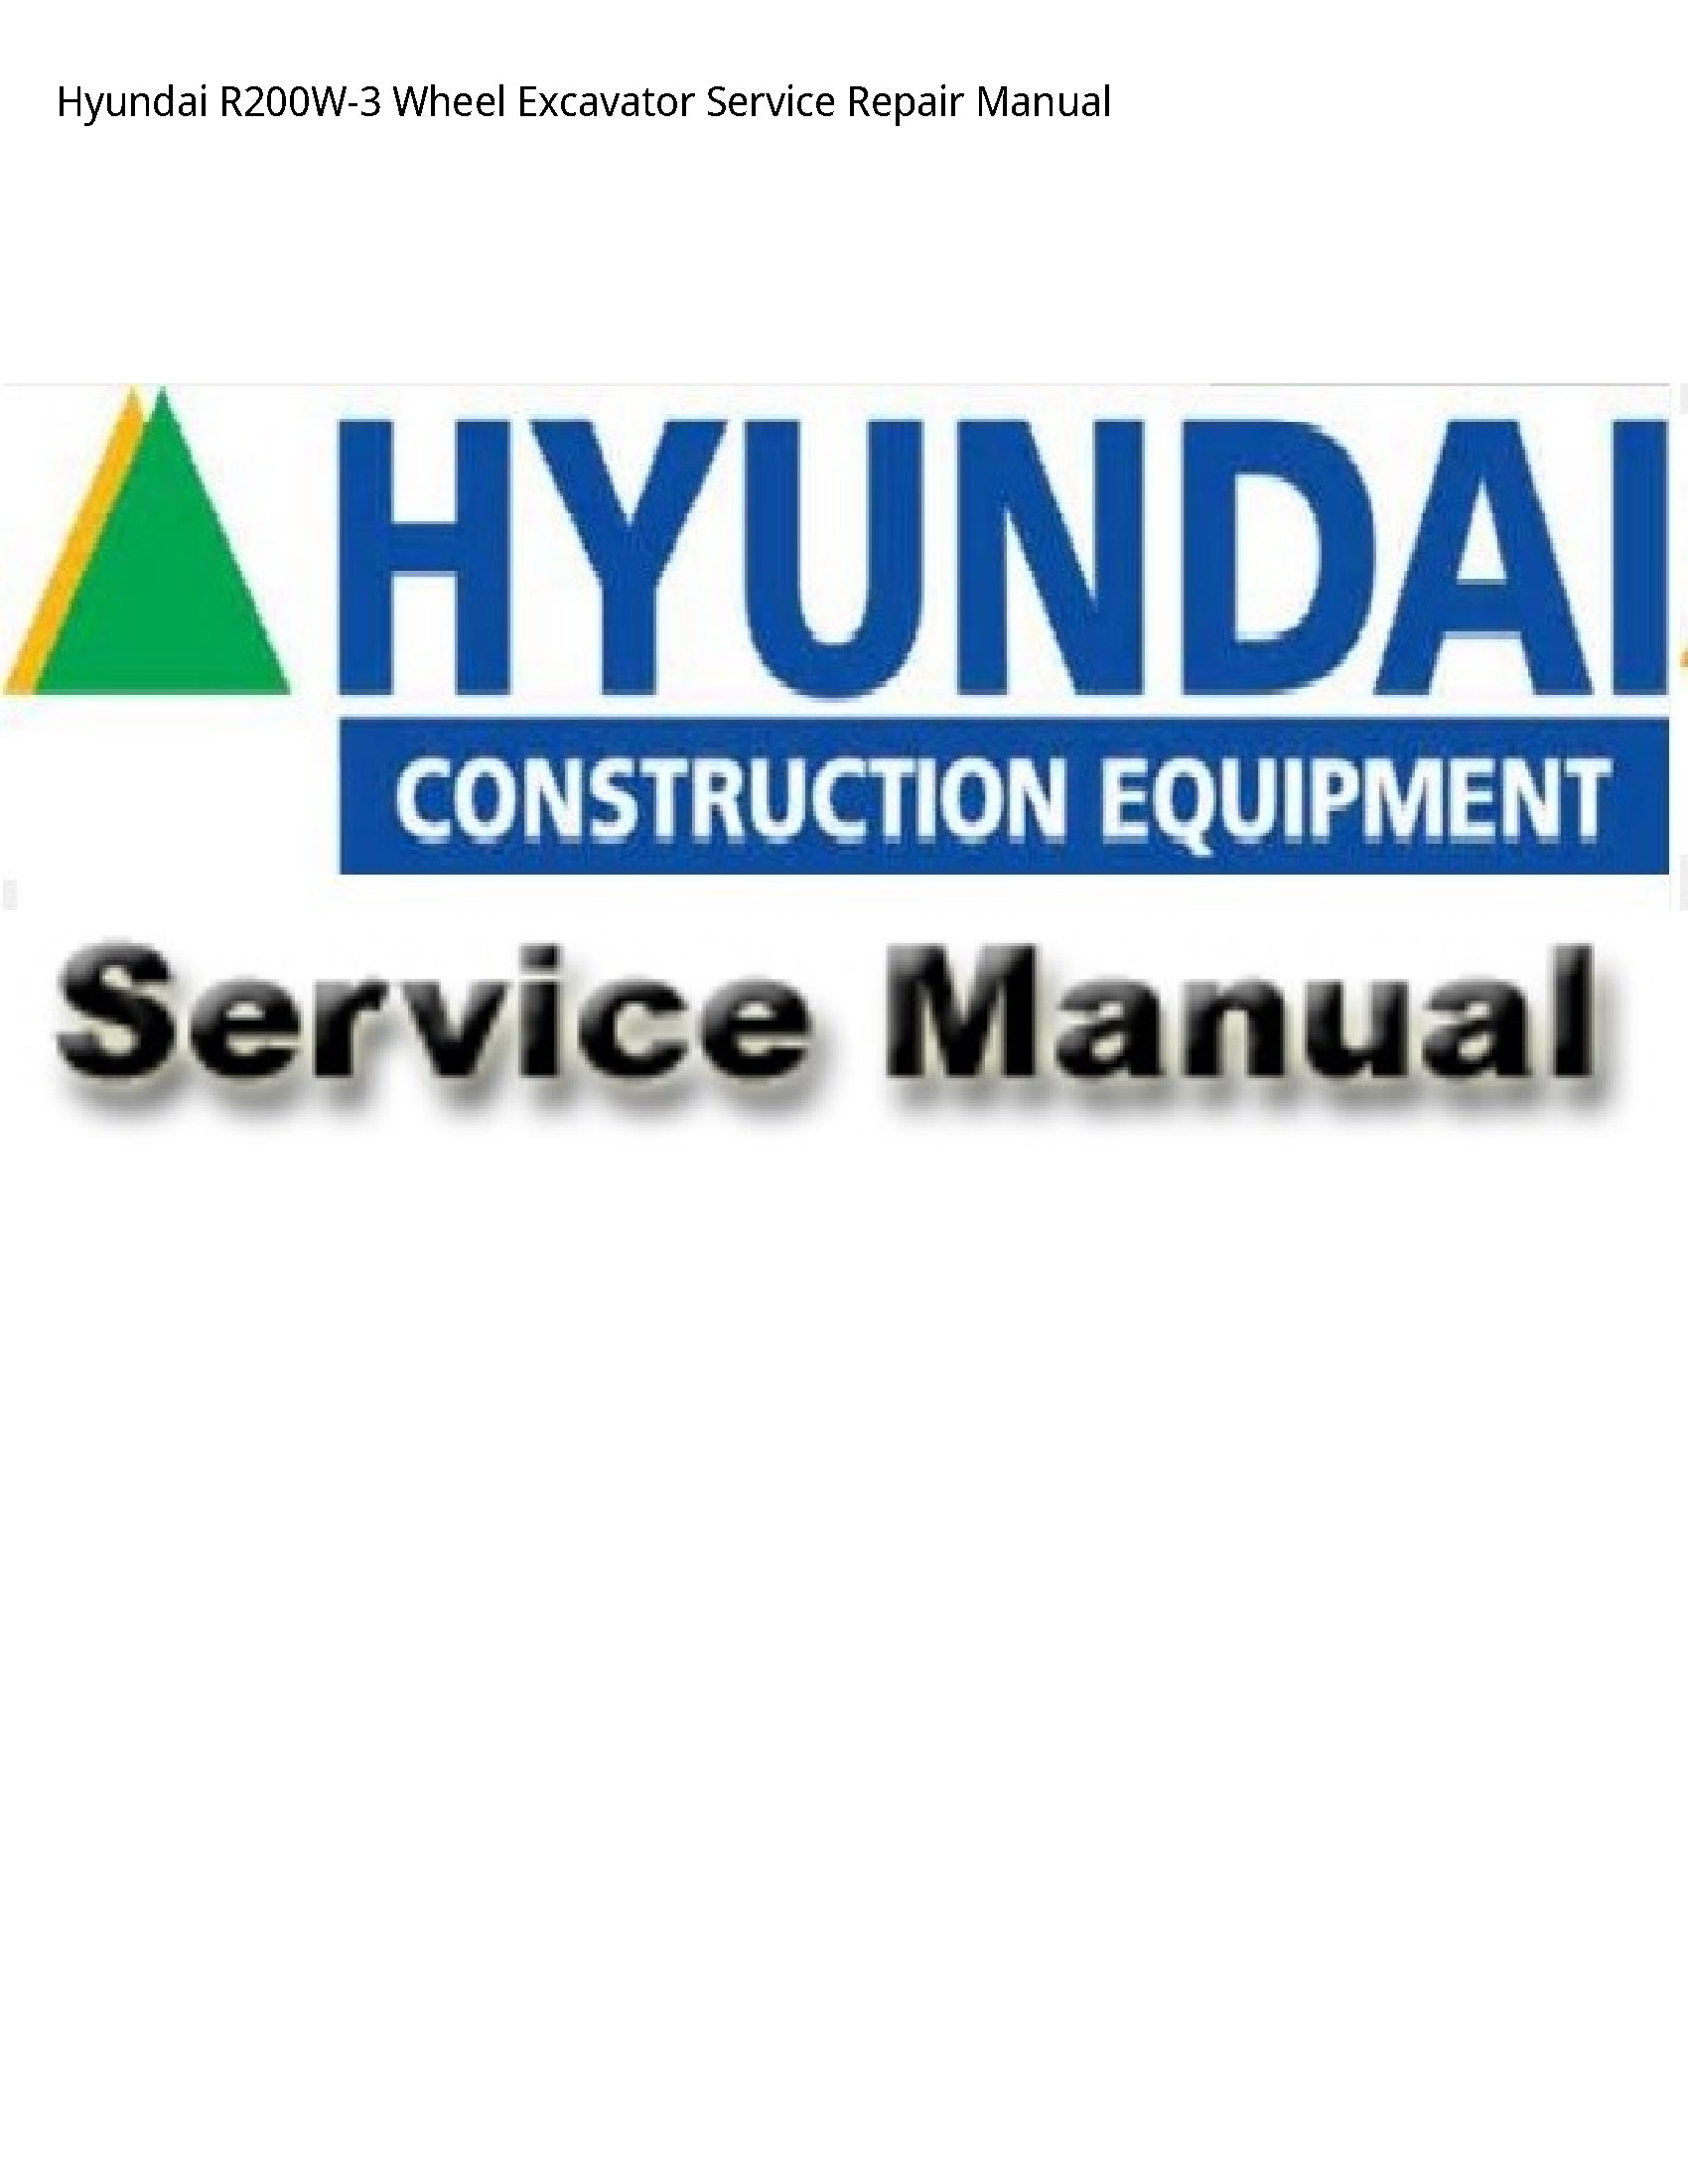 Hyundai R200W-3 Wheel Excavator manual